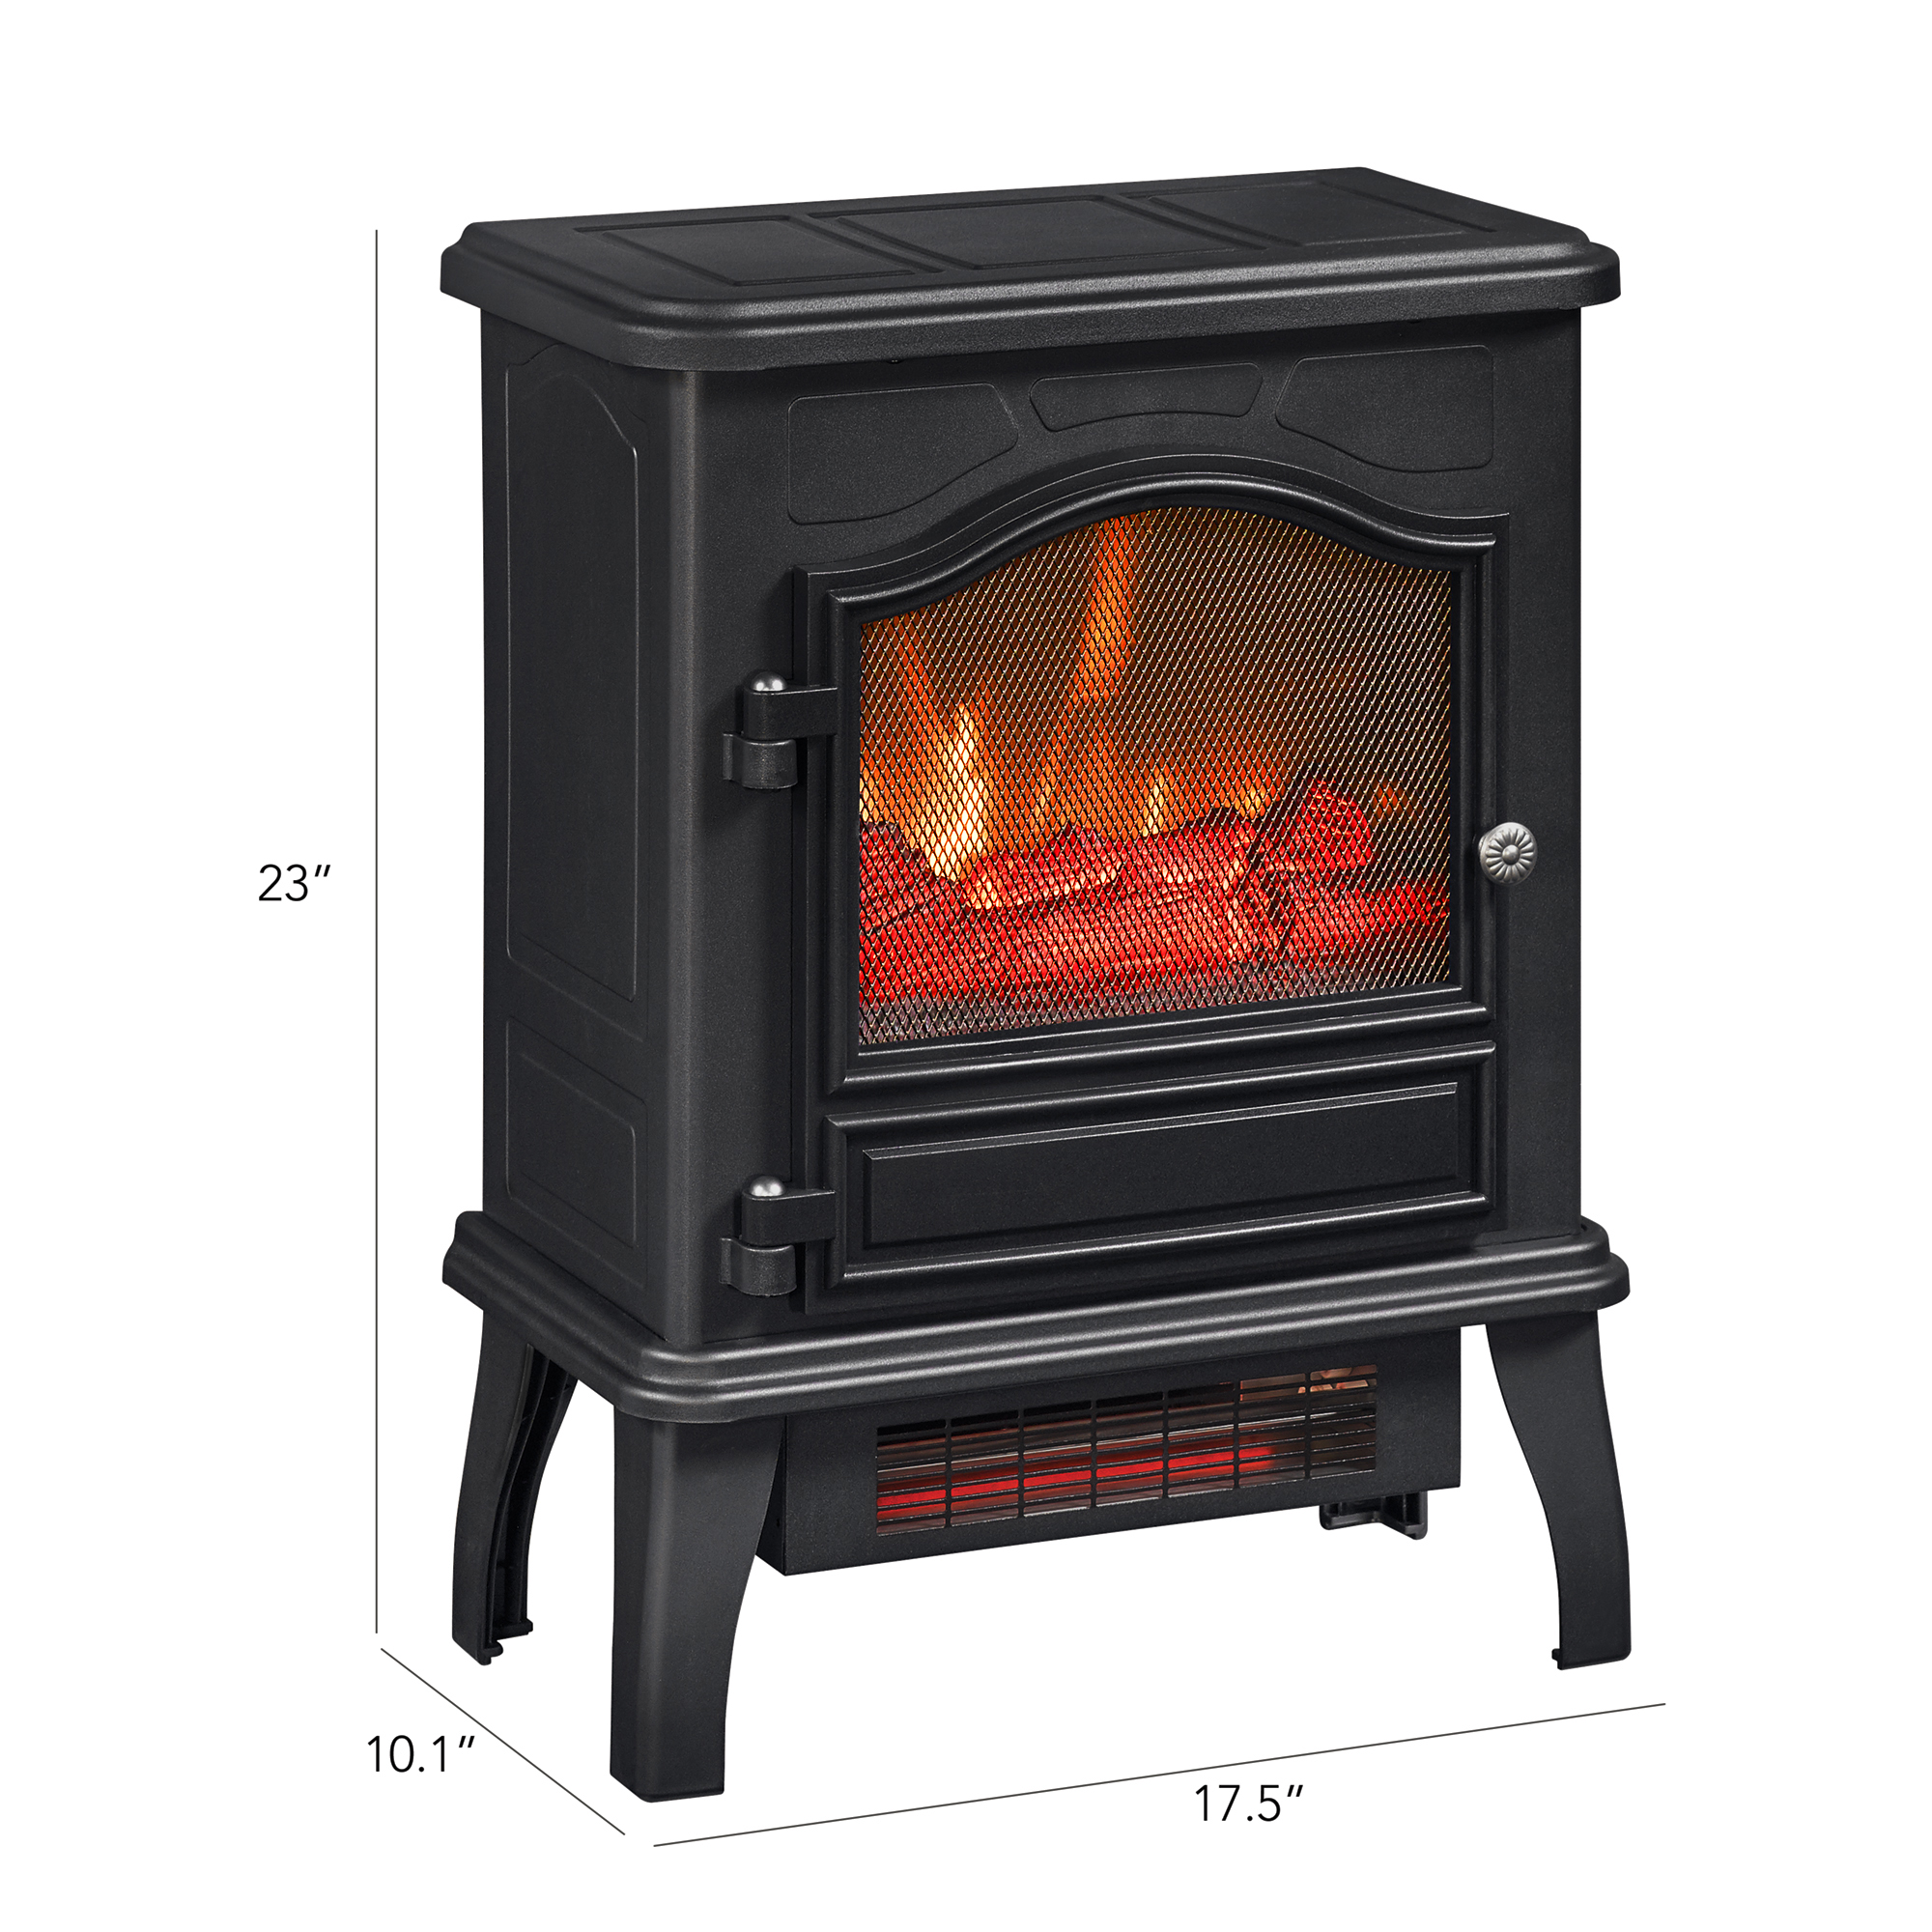 ChimneyFree Powerheat Infrared Quartz Electric Stove Heater, 1500W, Black - image 3 of 15